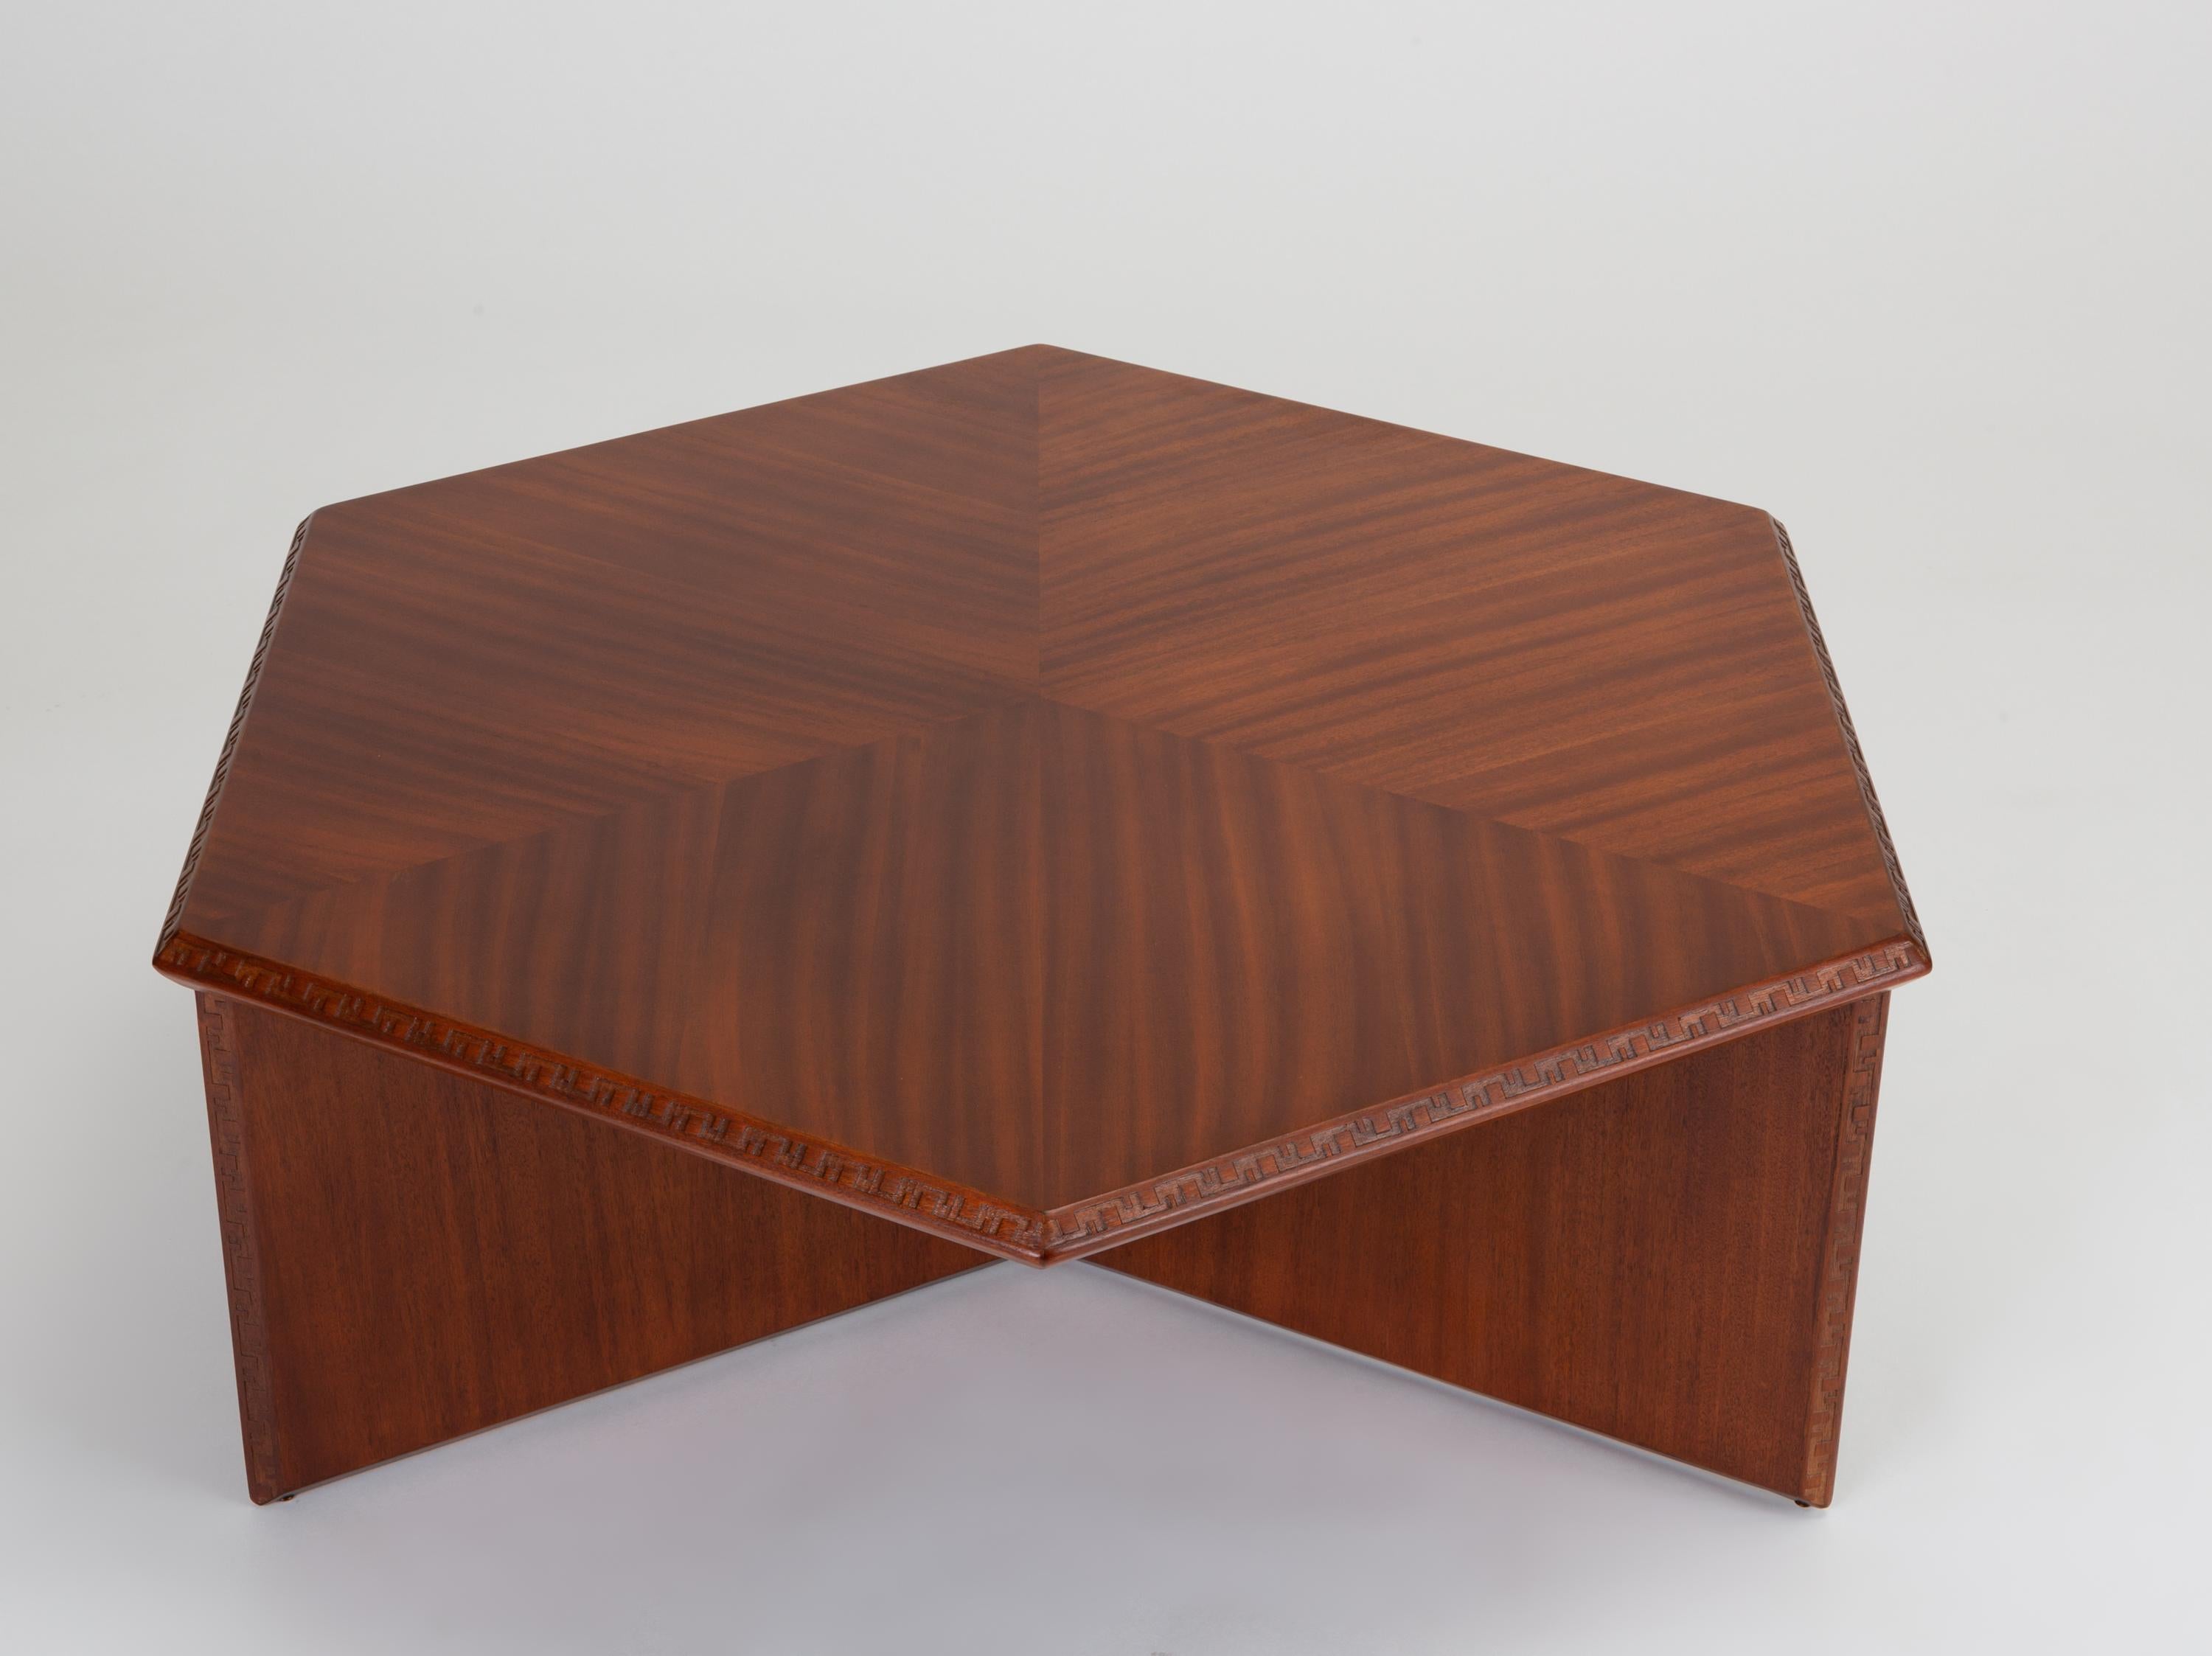 Frank Lloyd Wright “Taliesin” Coffee Table for Heritage-Henredon 1